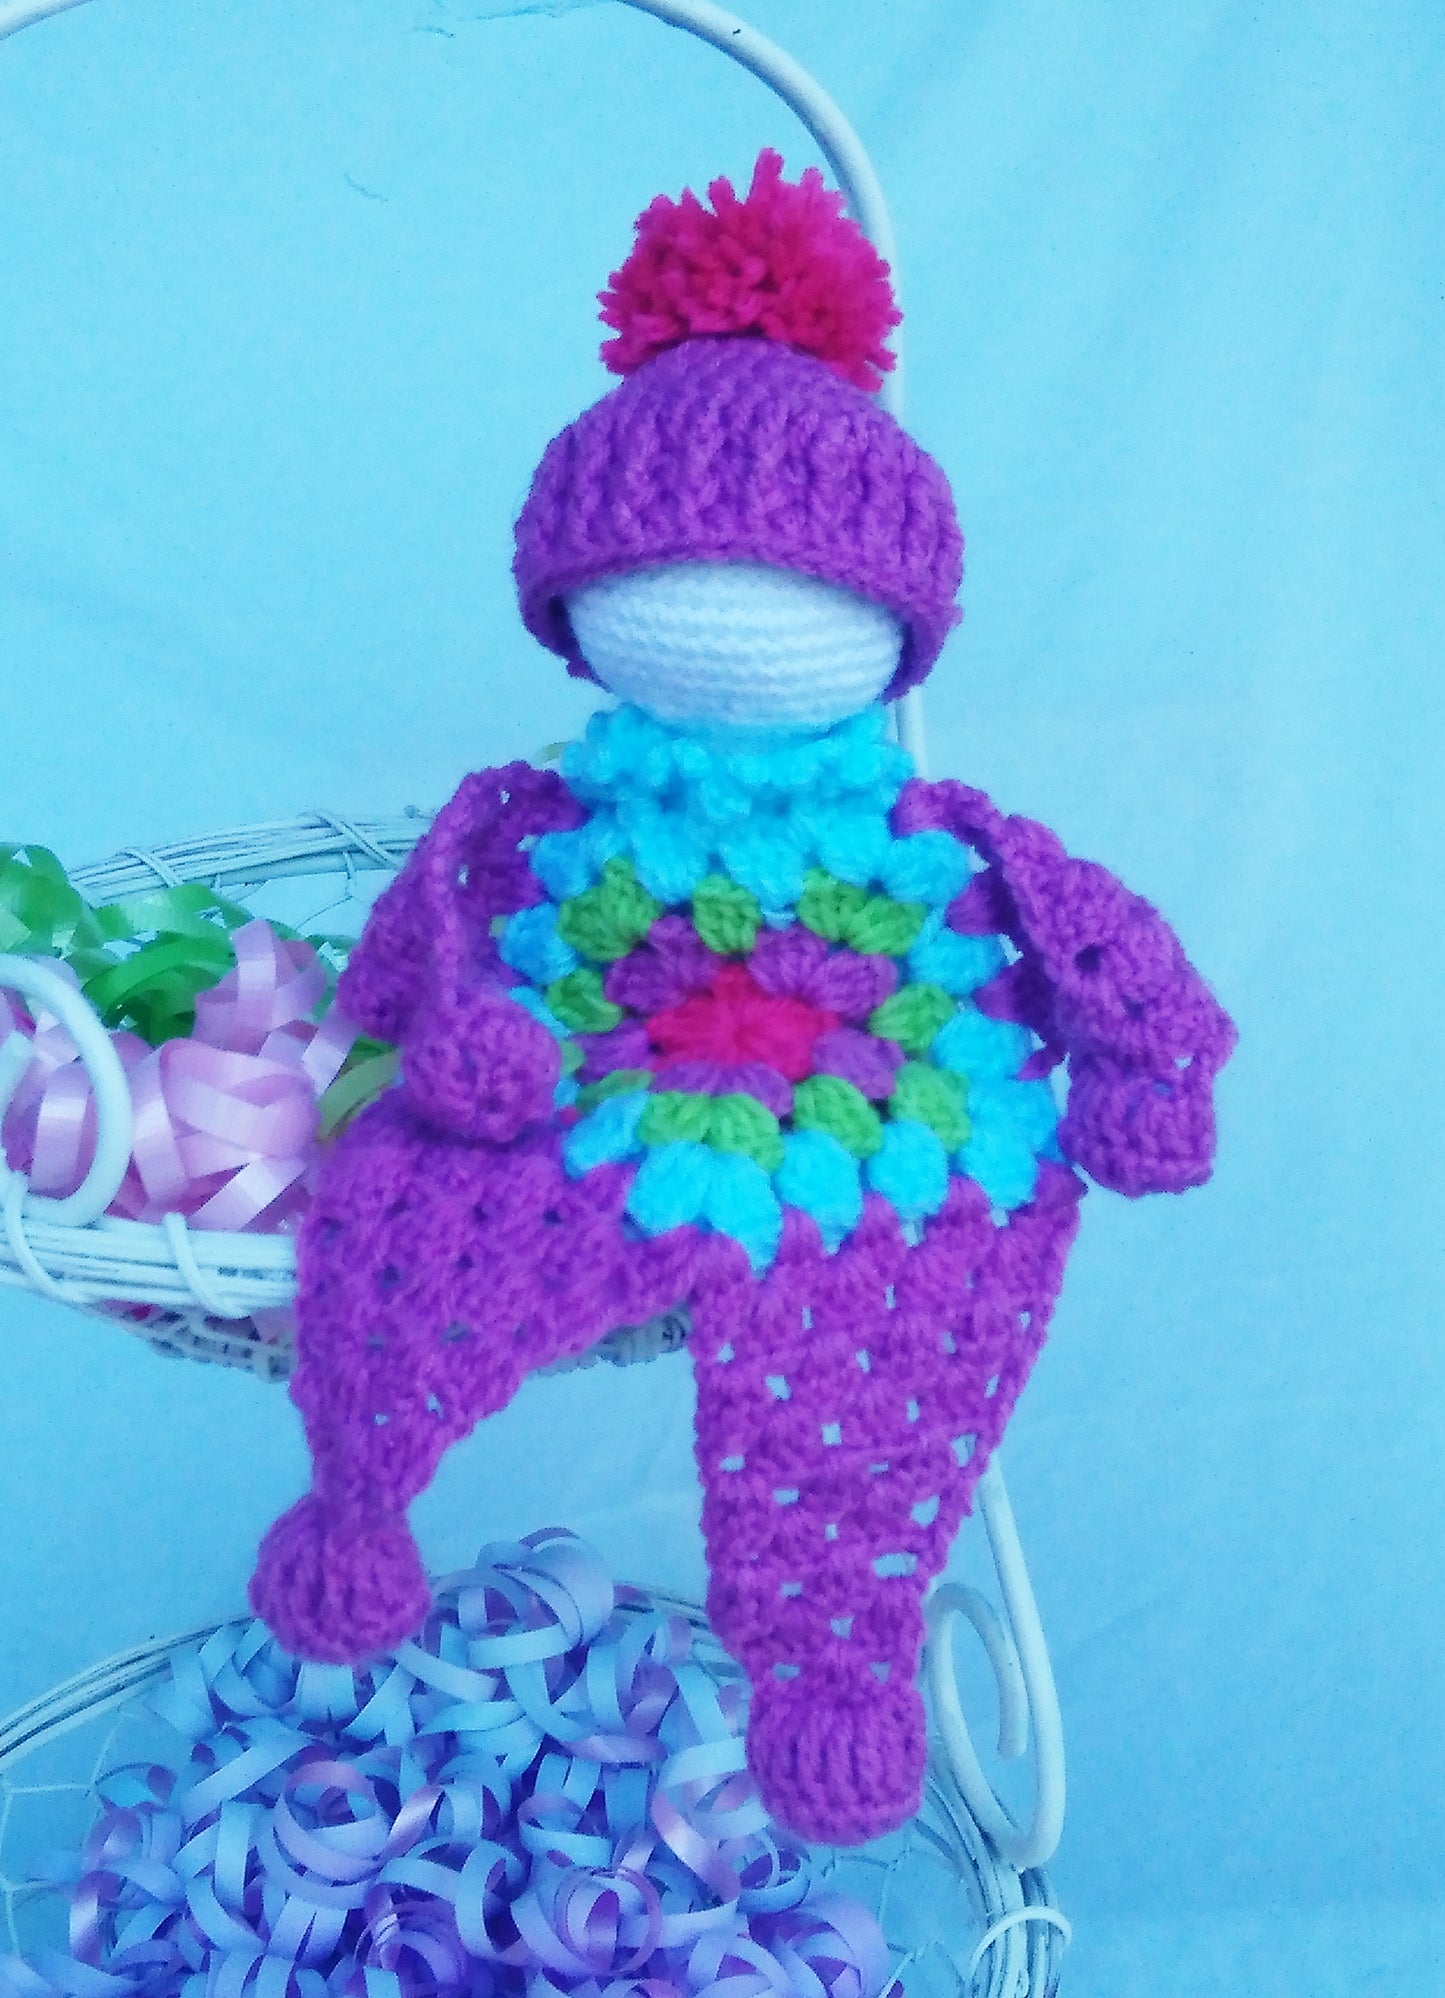  Crochet Doll Pattern, Cuddle baby pattern, Crochet Pattern, Baby Doll, Lovey Crochet, Granny Square Pattern, Star Baby Doll, PDF Download,Granny's Cuddle Babies - Annie Potter's Yarn Basket